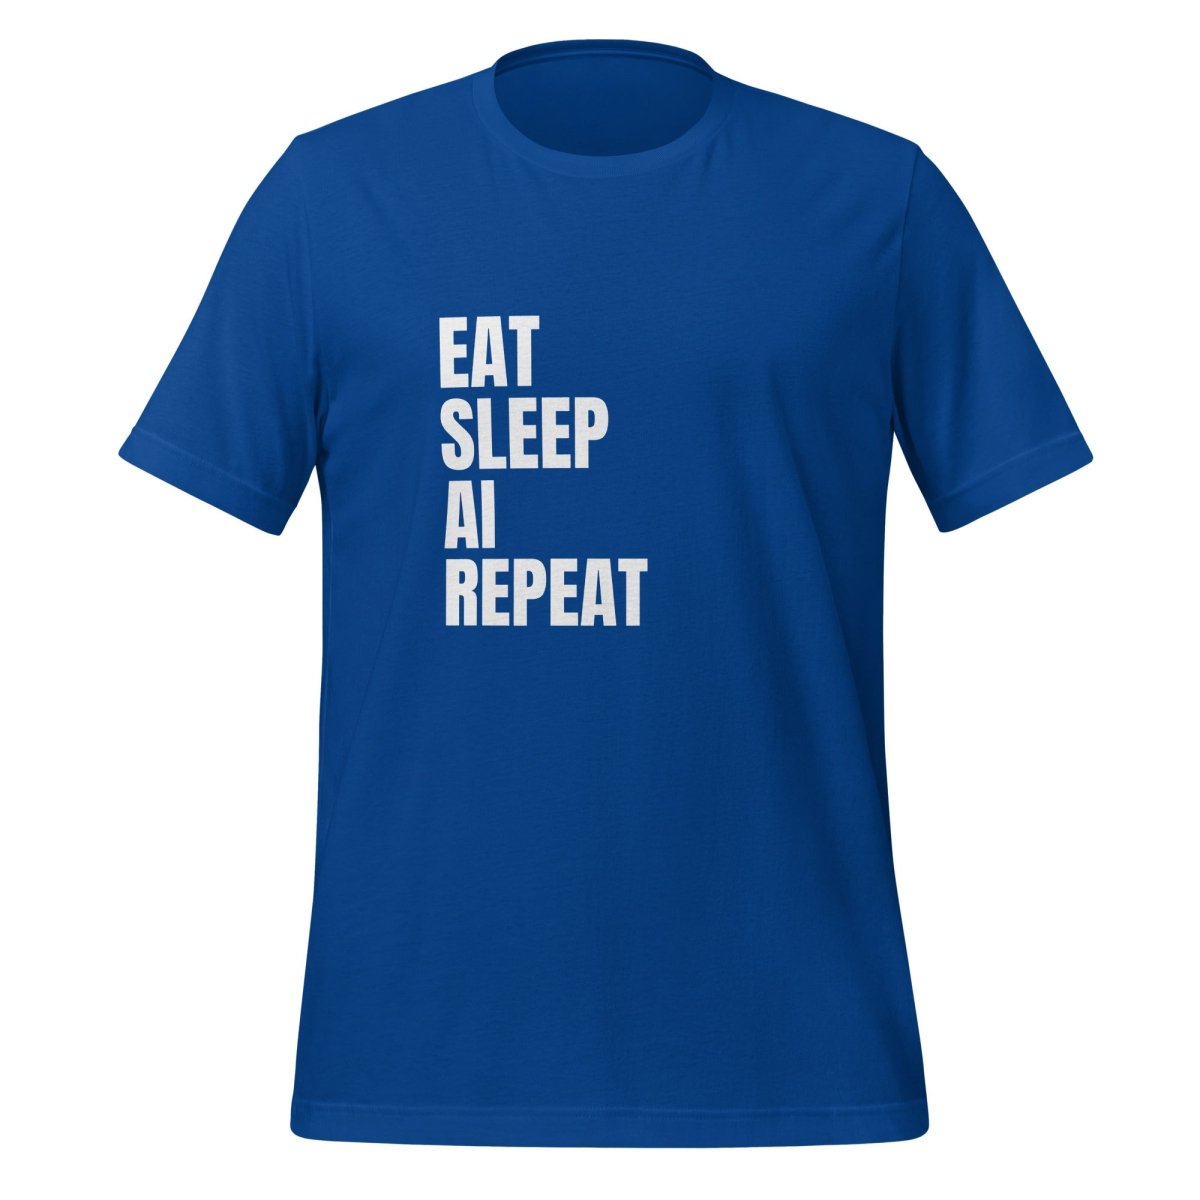 EAT SLEEP AI REPEAT T - Shirt 1 (unisex) - True Royal - AI Store